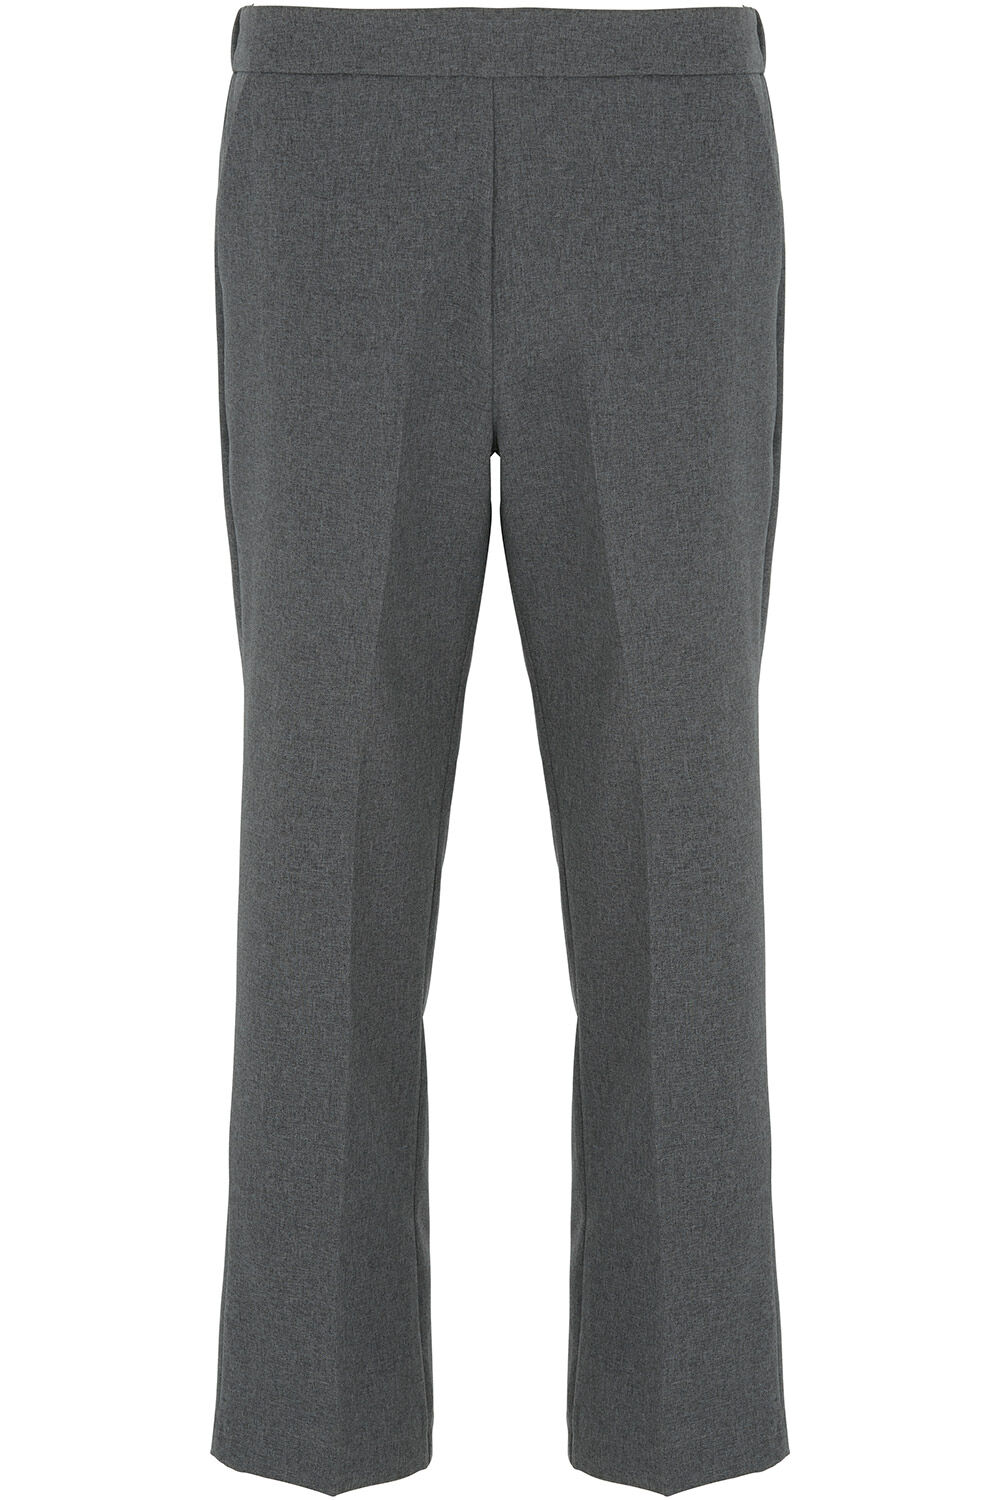 Bonmarche Plain Straight Leg Pull On Trousers - Grey, Size: 14 - David Emanuel Bonmarche